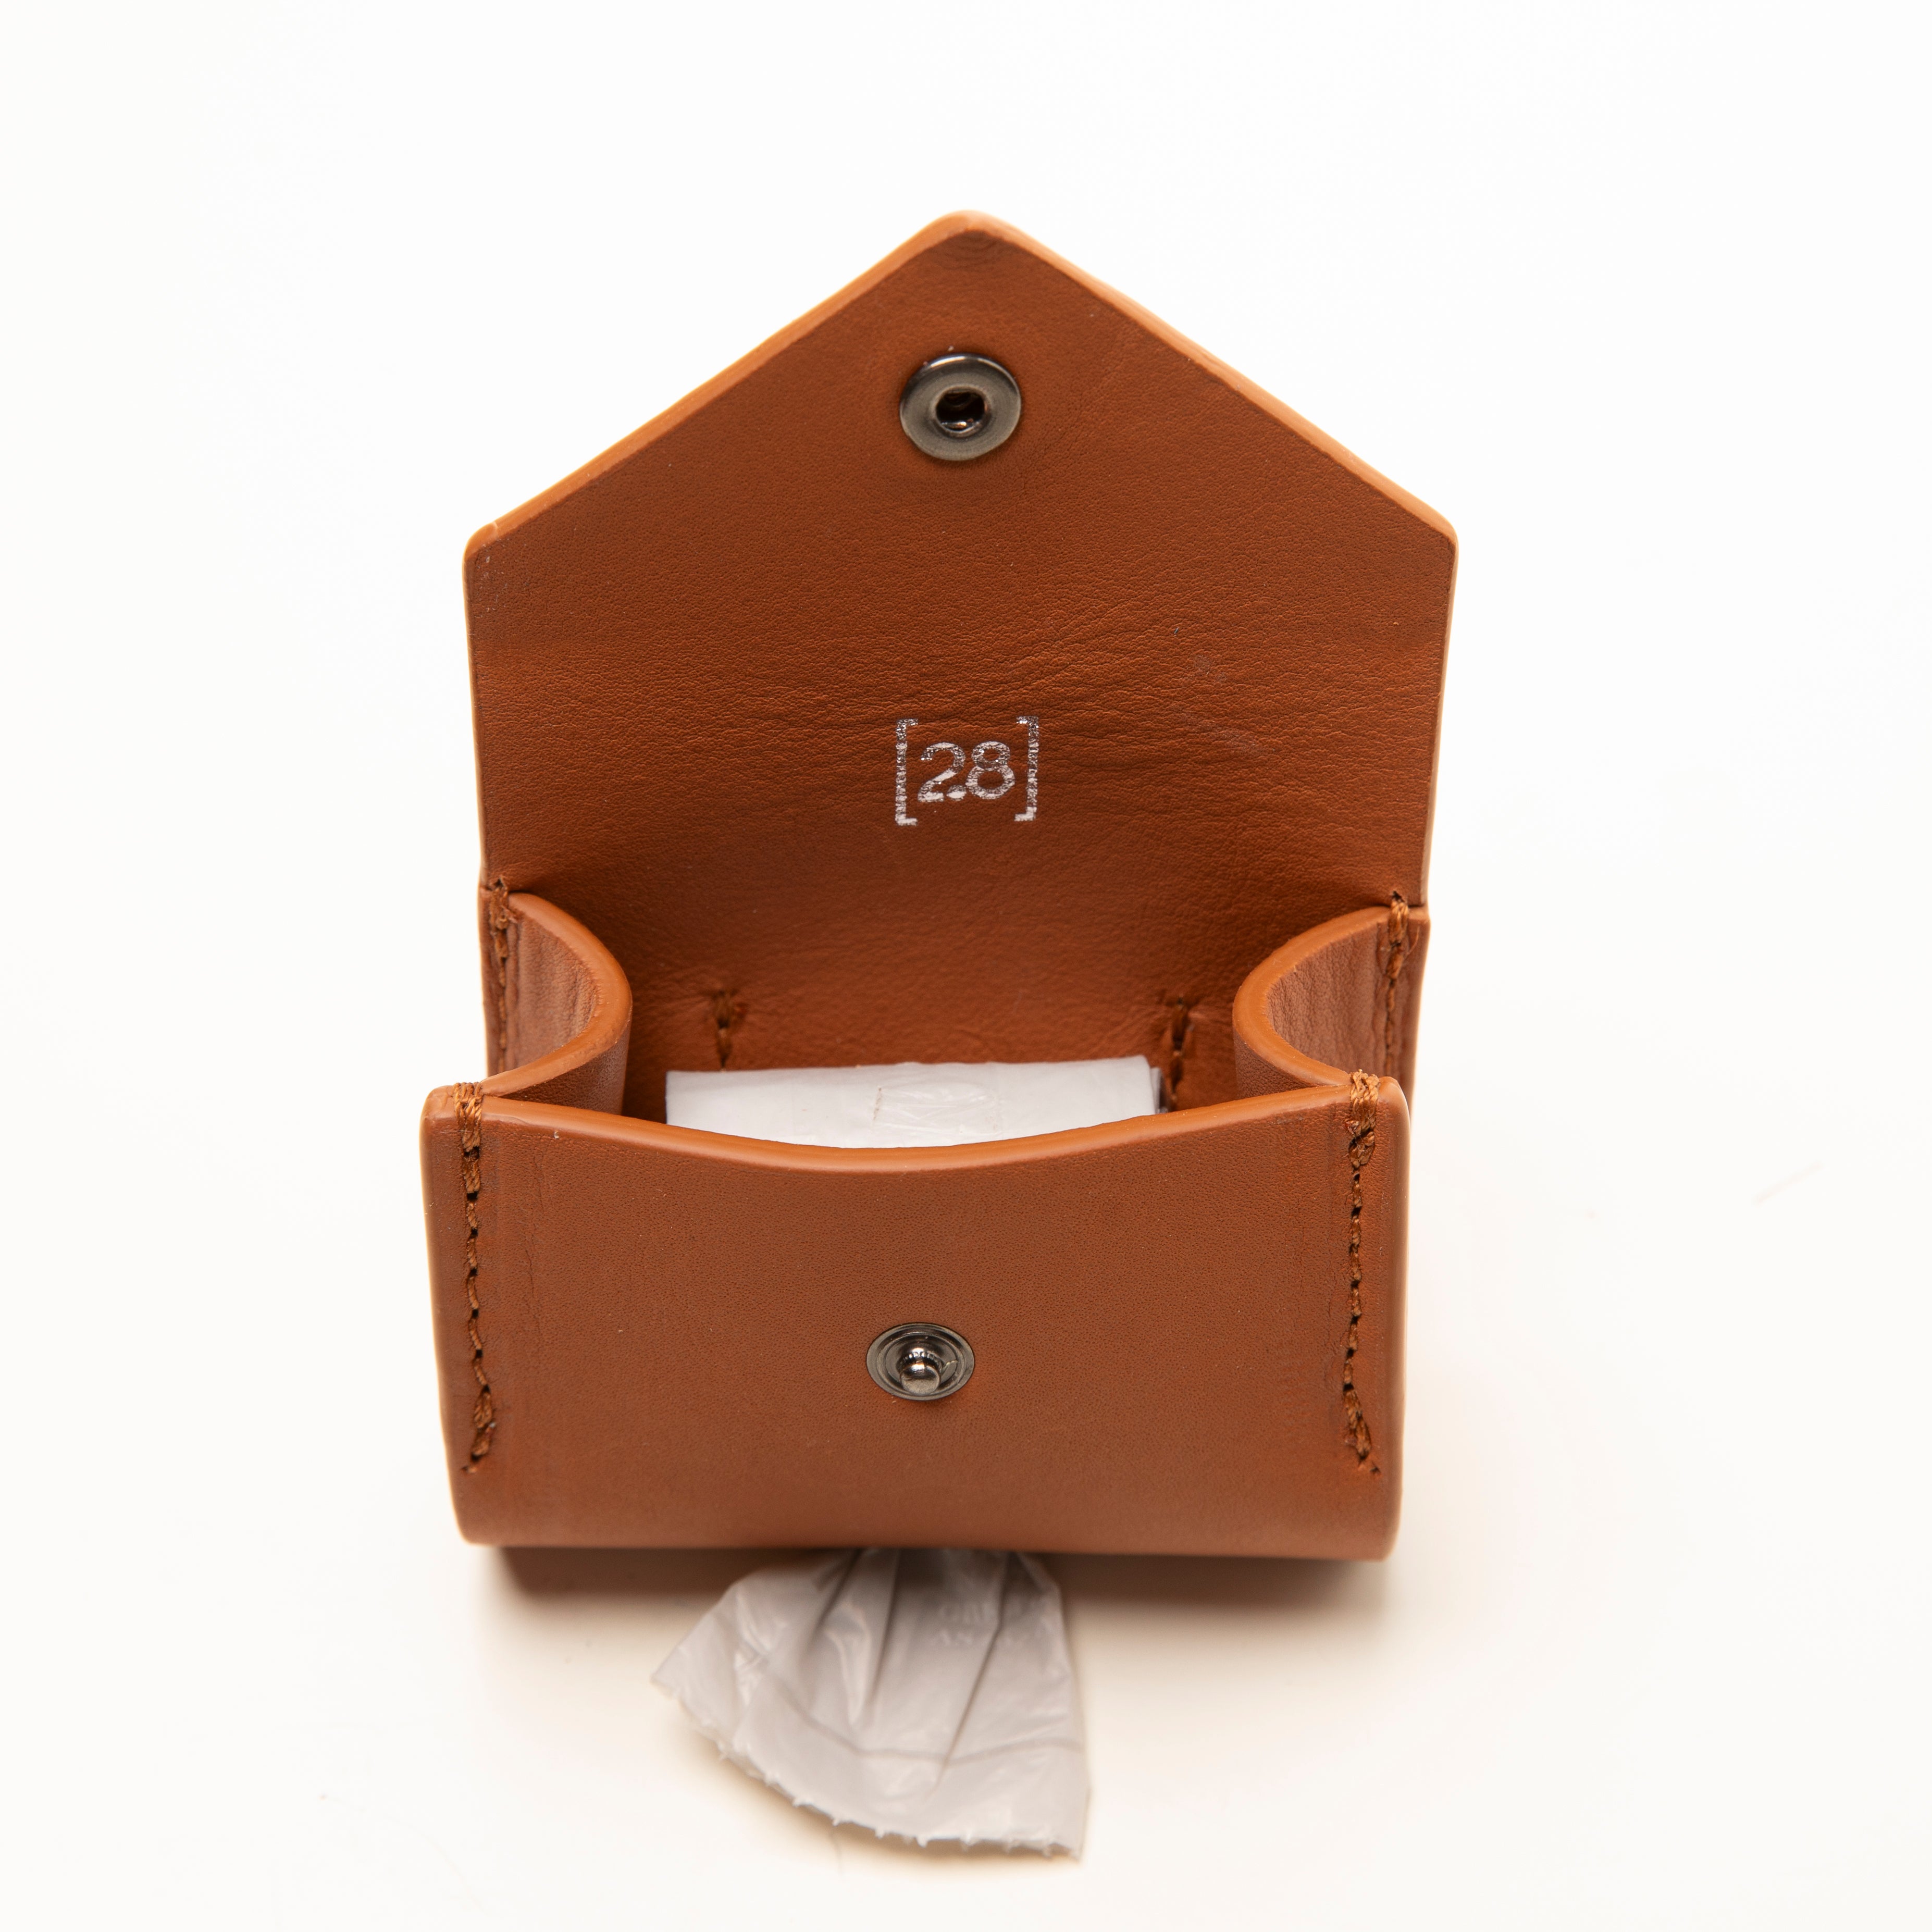 nappa-leather-poop-bag-holder.jpg